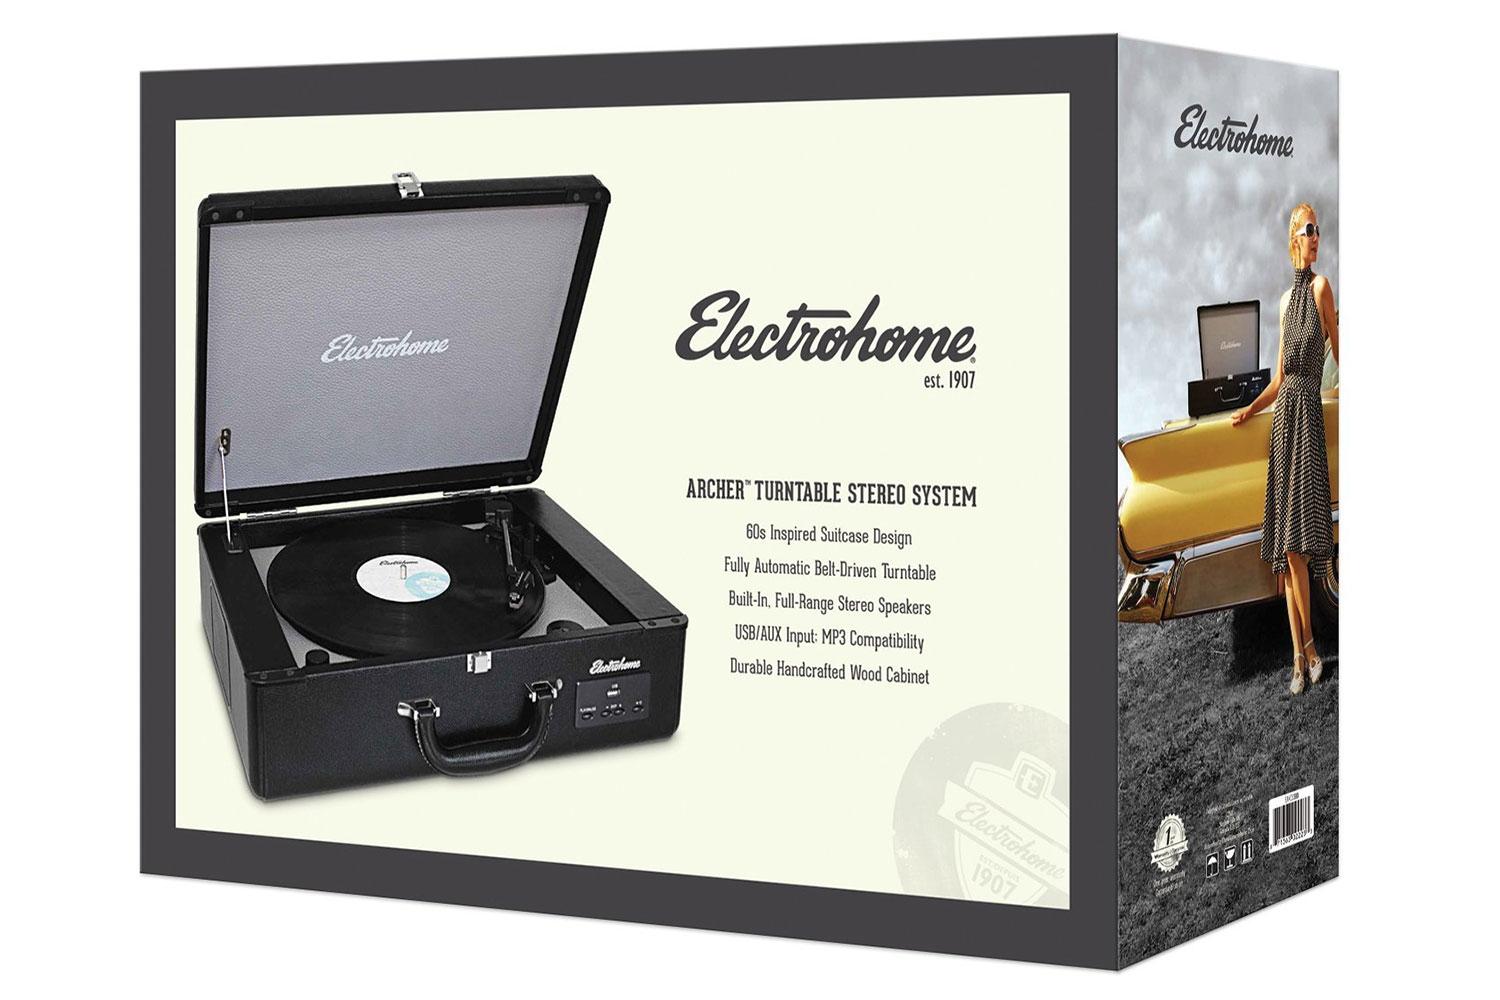 Electrohome Archer Vinyl Record Player box